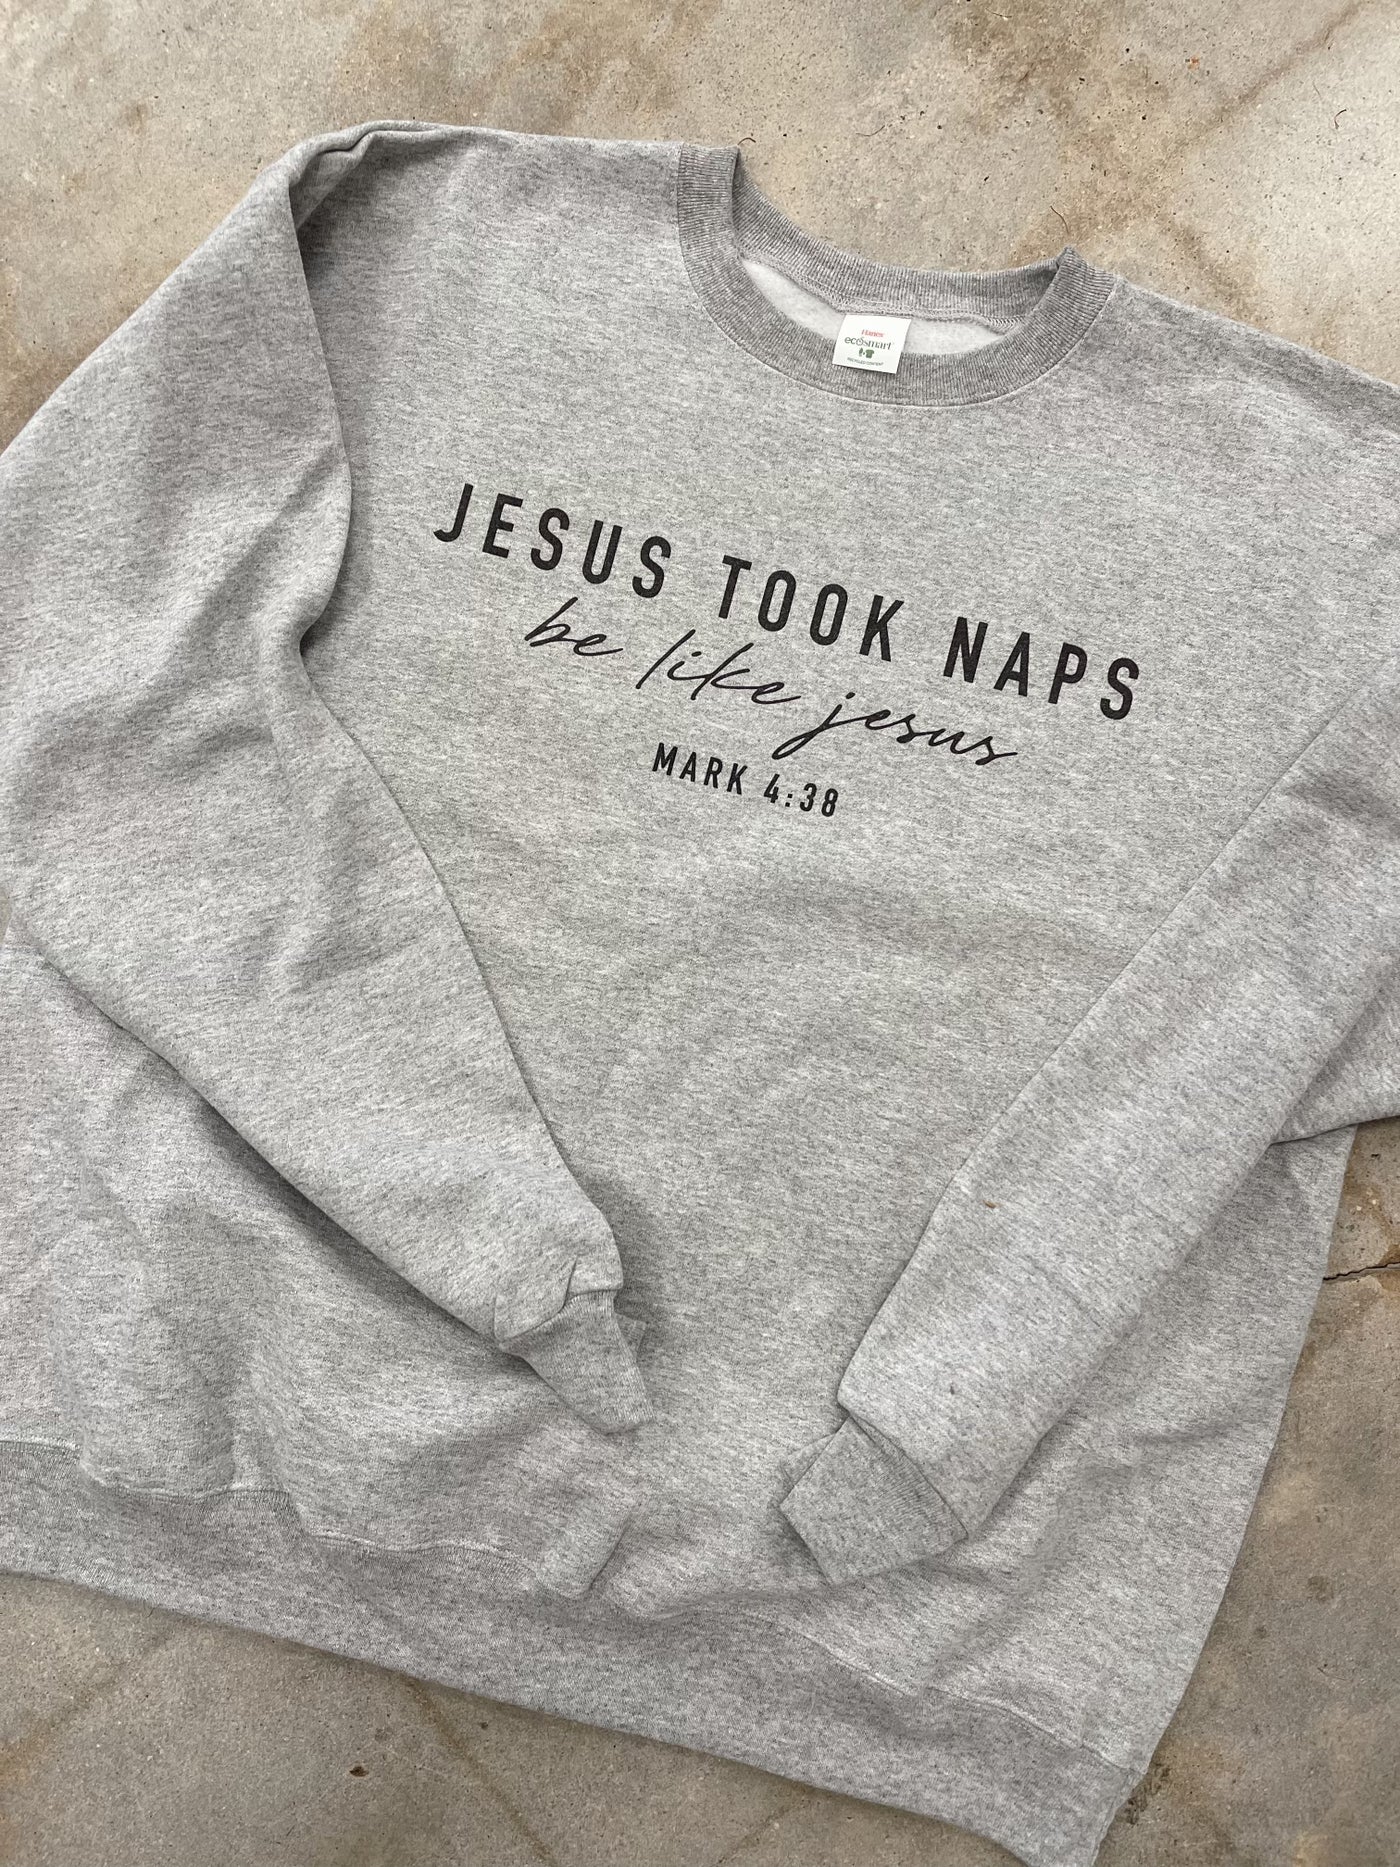 Jesus Took Naps Crewneck